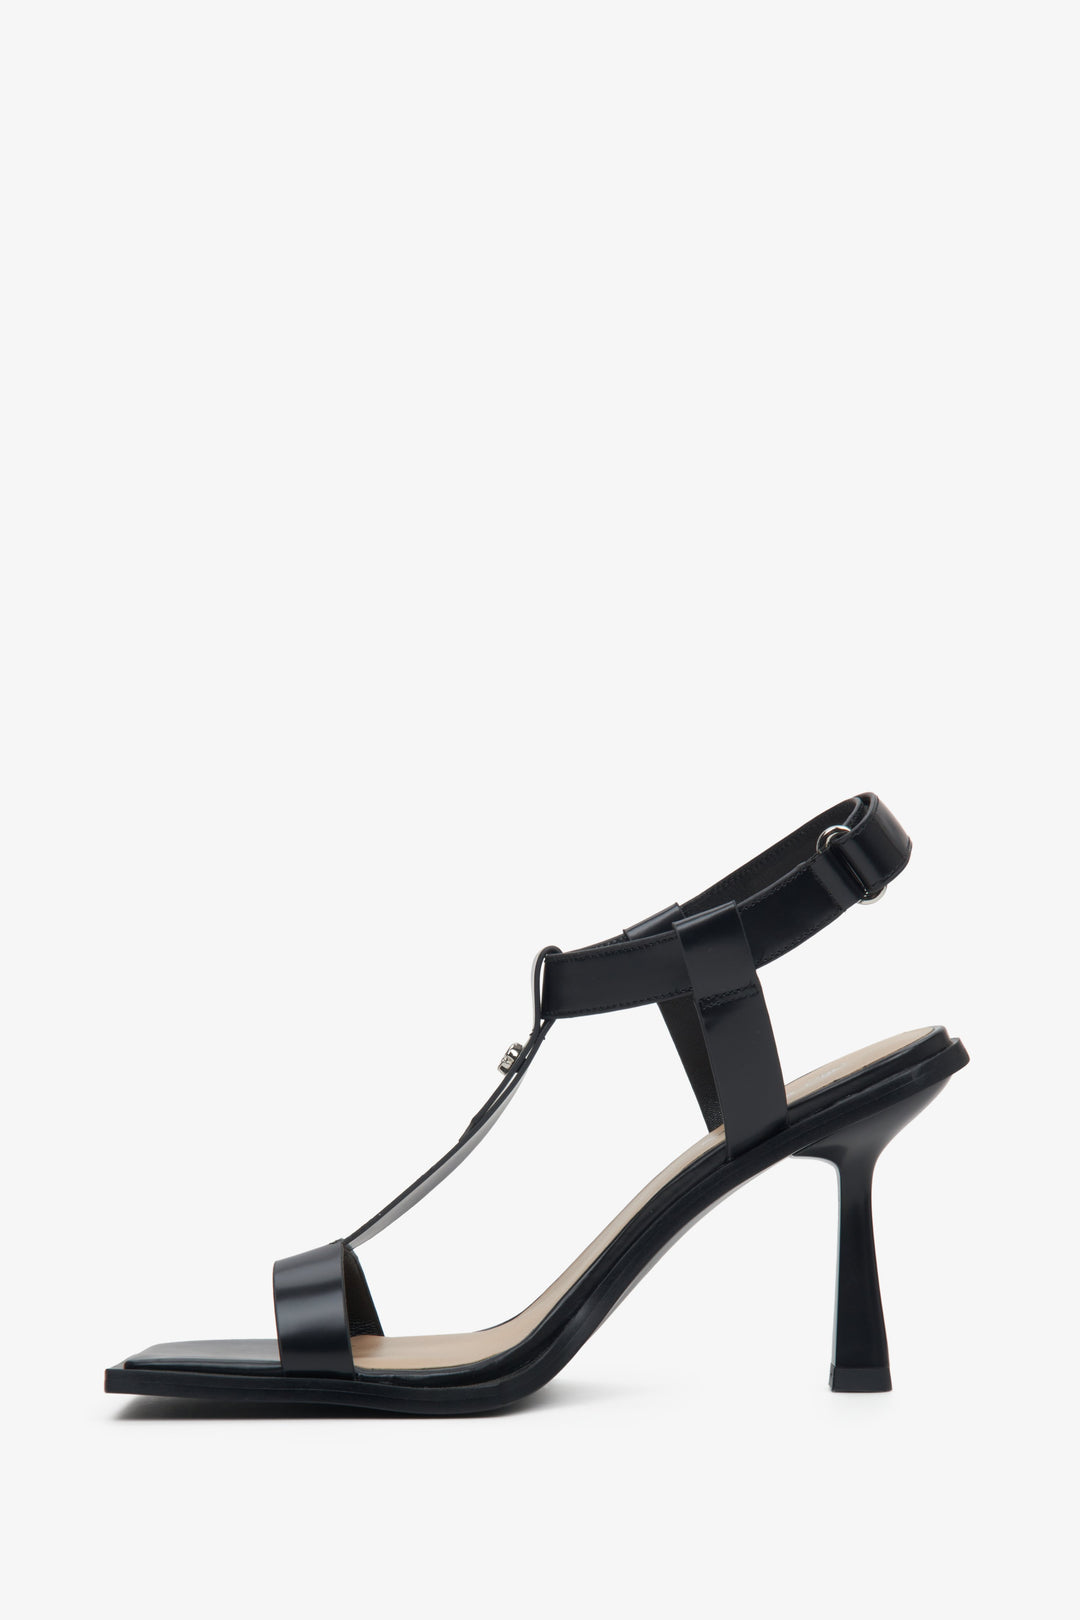 Damskie czarne sandały Estro ze skóry naturalnej zapinane na kostce - profil buta.